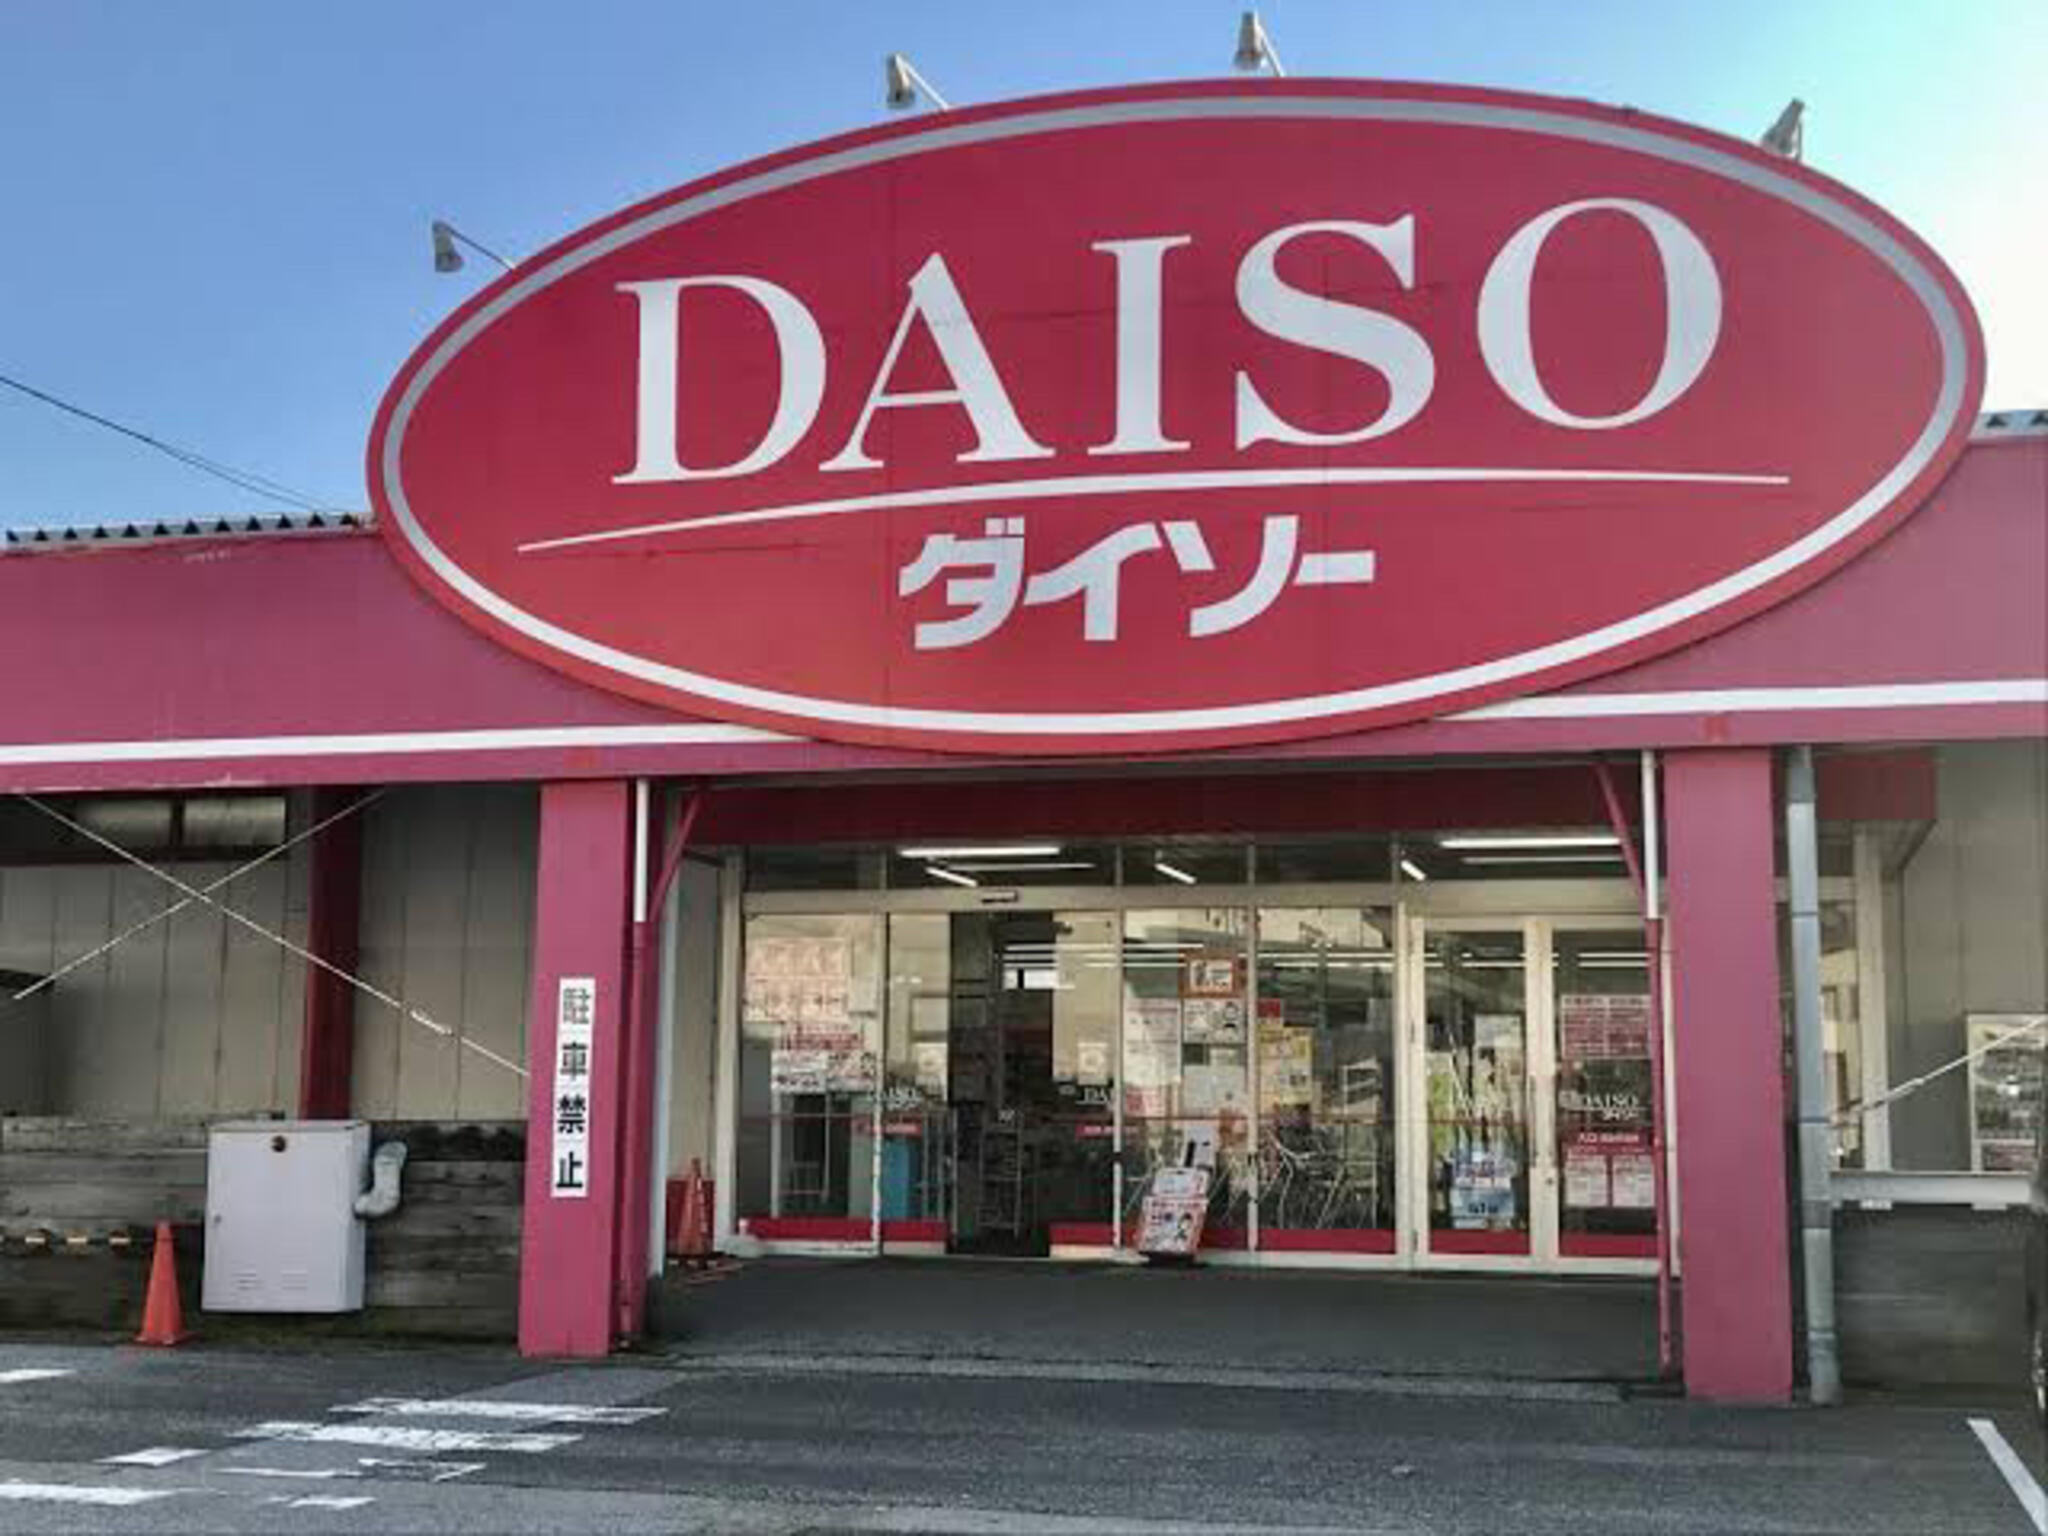 DAISO 彦根国道店の代表写真1